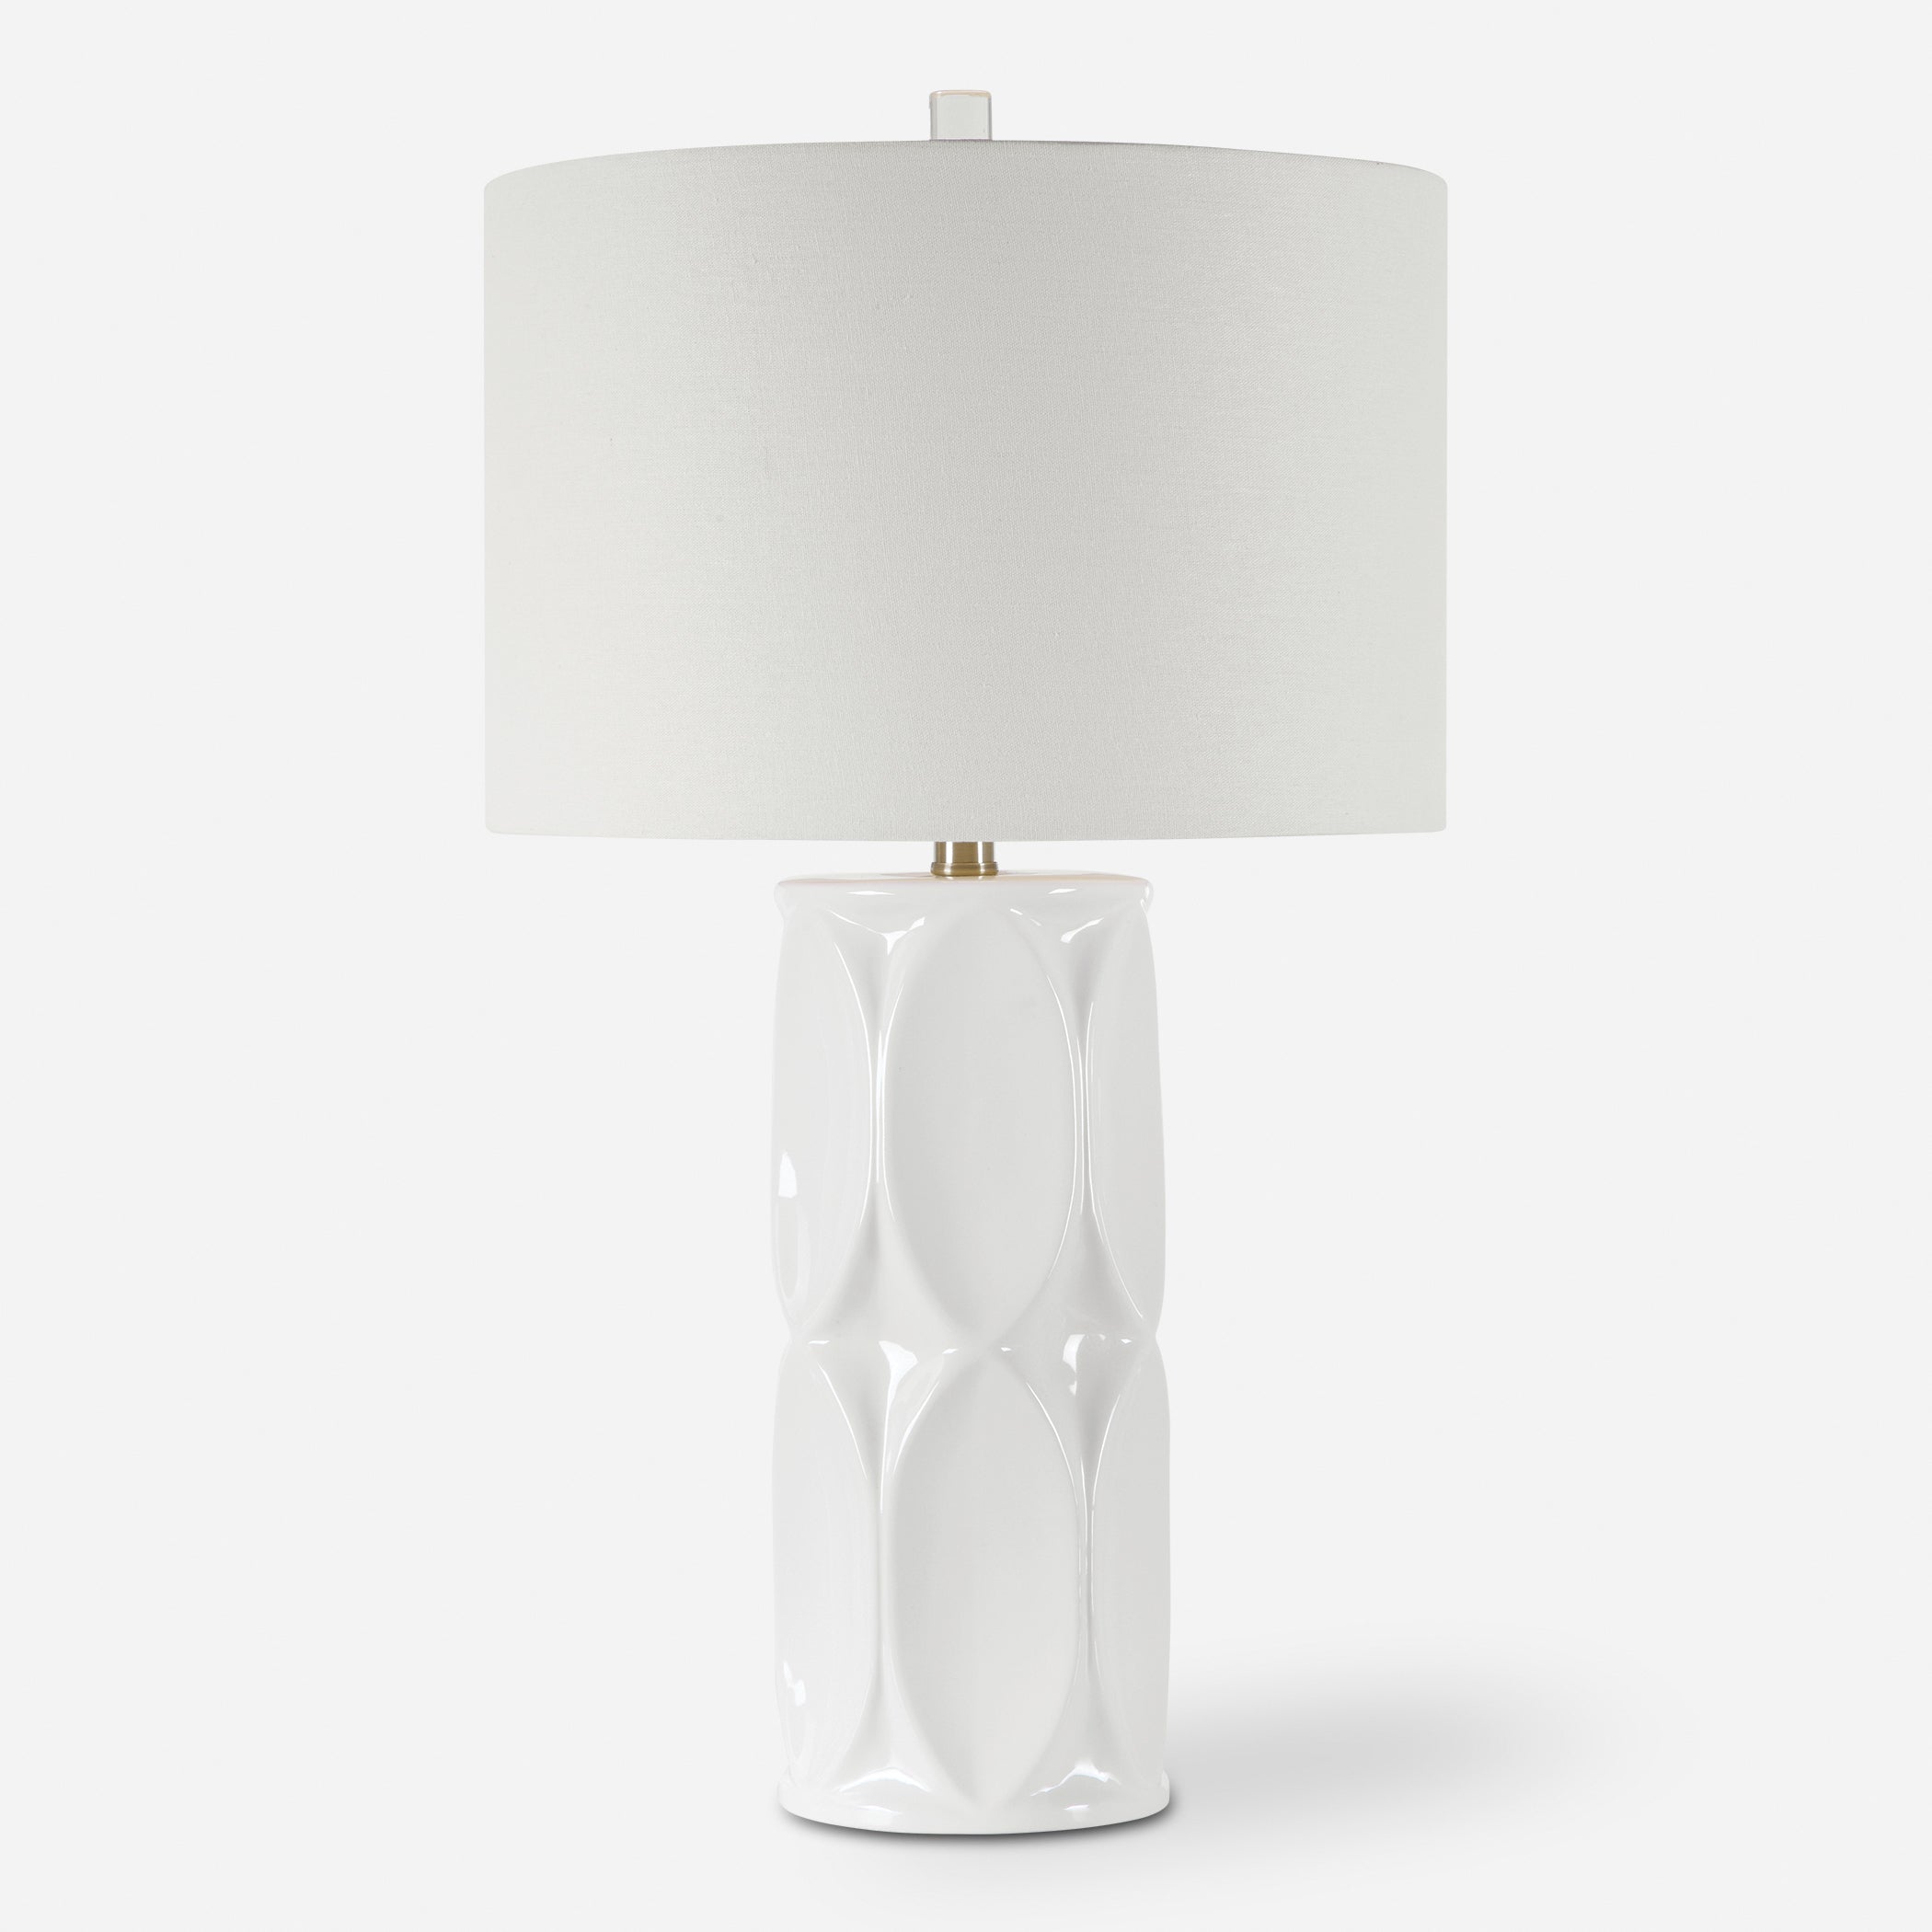 Uttermost Sinclair White Table Lamp White Table Lamp Uttermost   